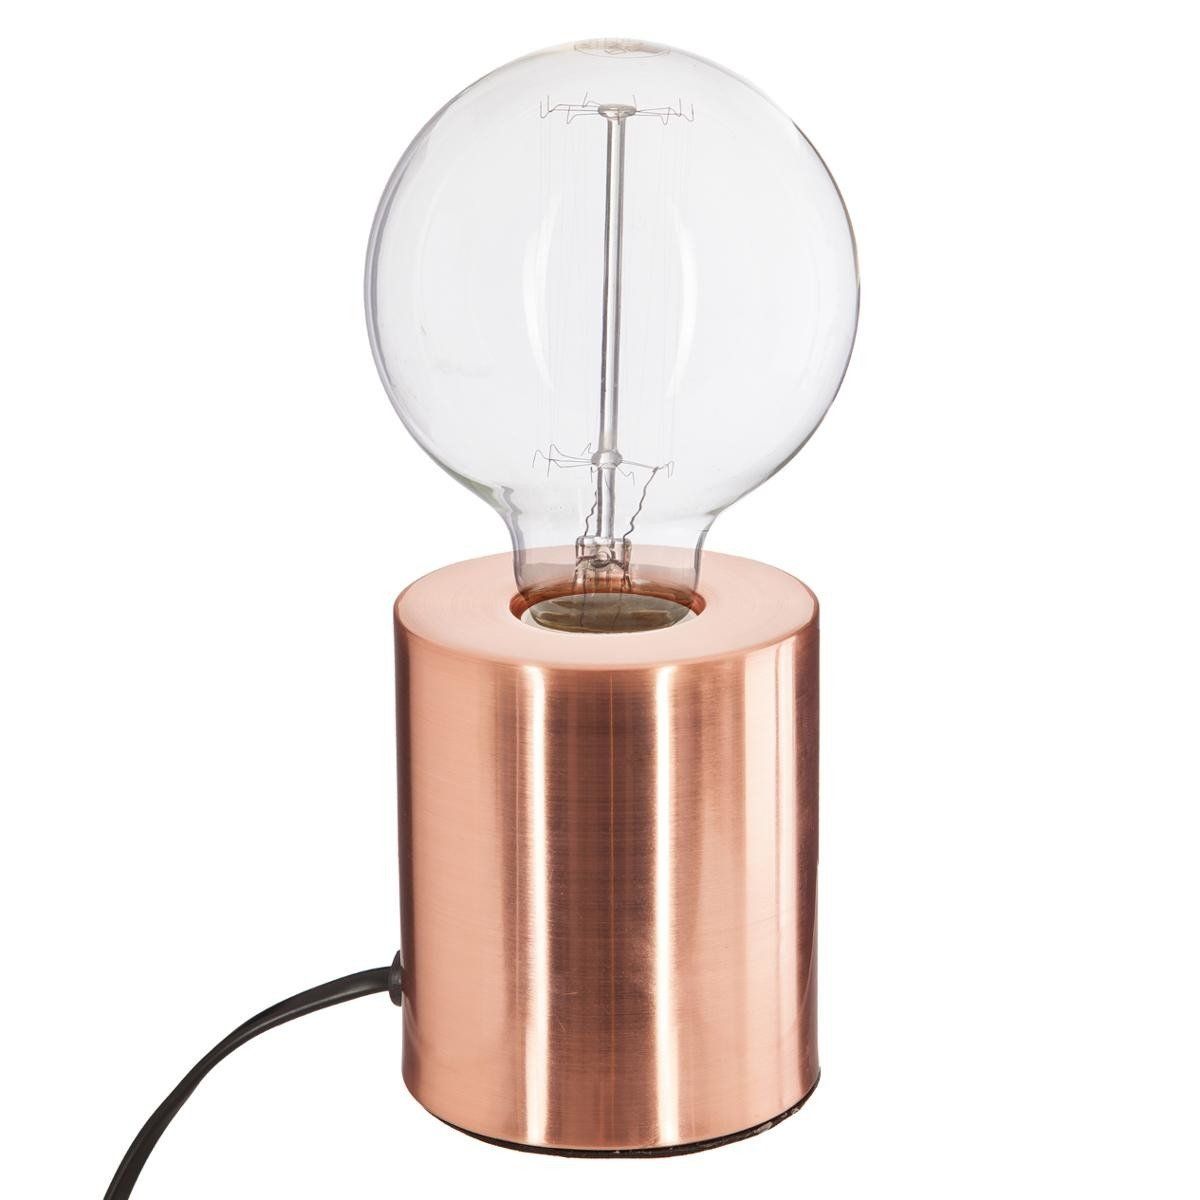 Atmosphera Dekorativní lampa TUIVRE, 10 cm, barva mědi - EMAKO.CZ s.r.o.